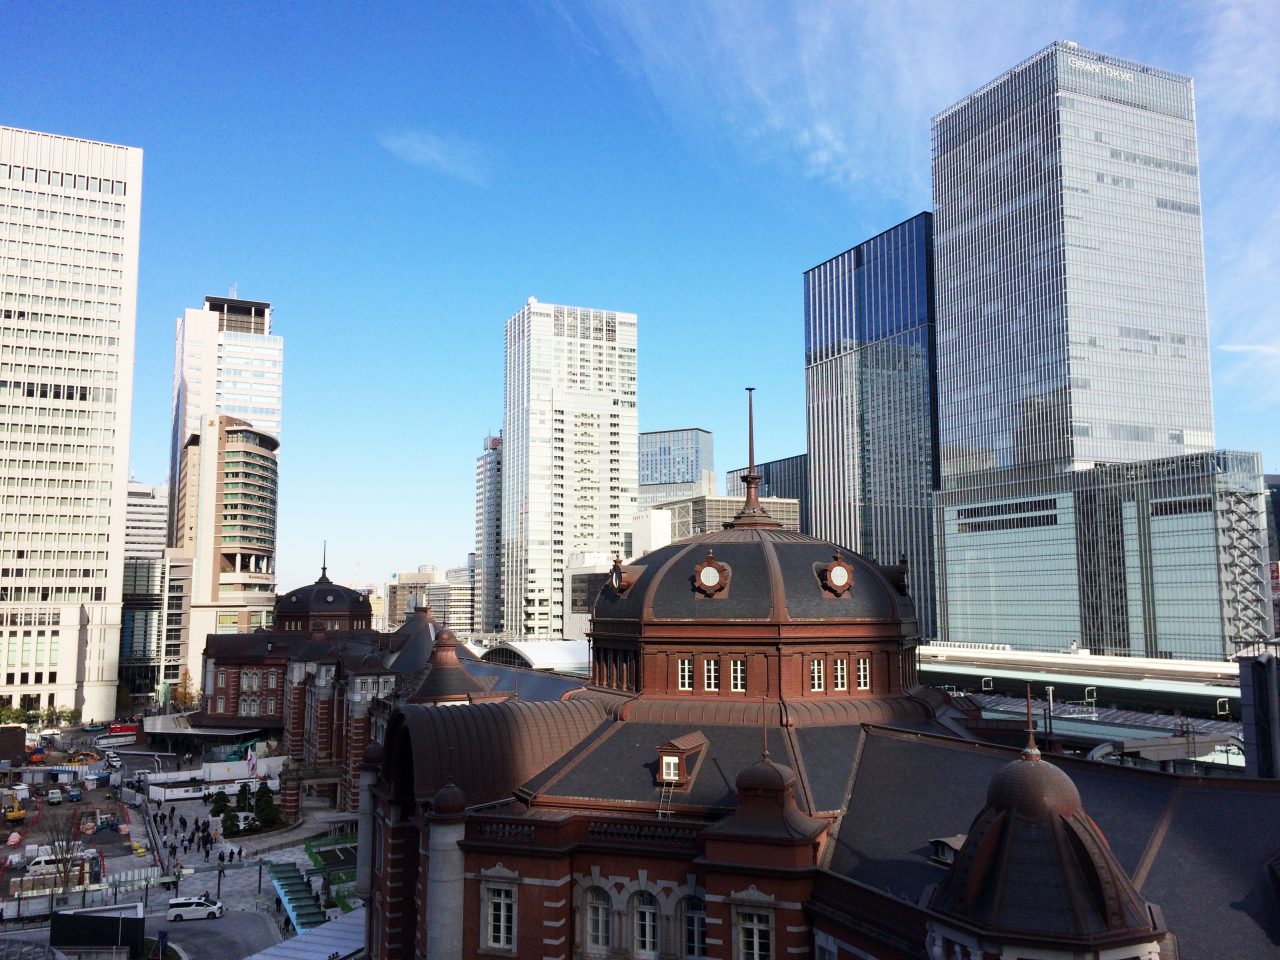 JPタワーから眺めた東京駅丸の内駅舎と高層ビル街の写真